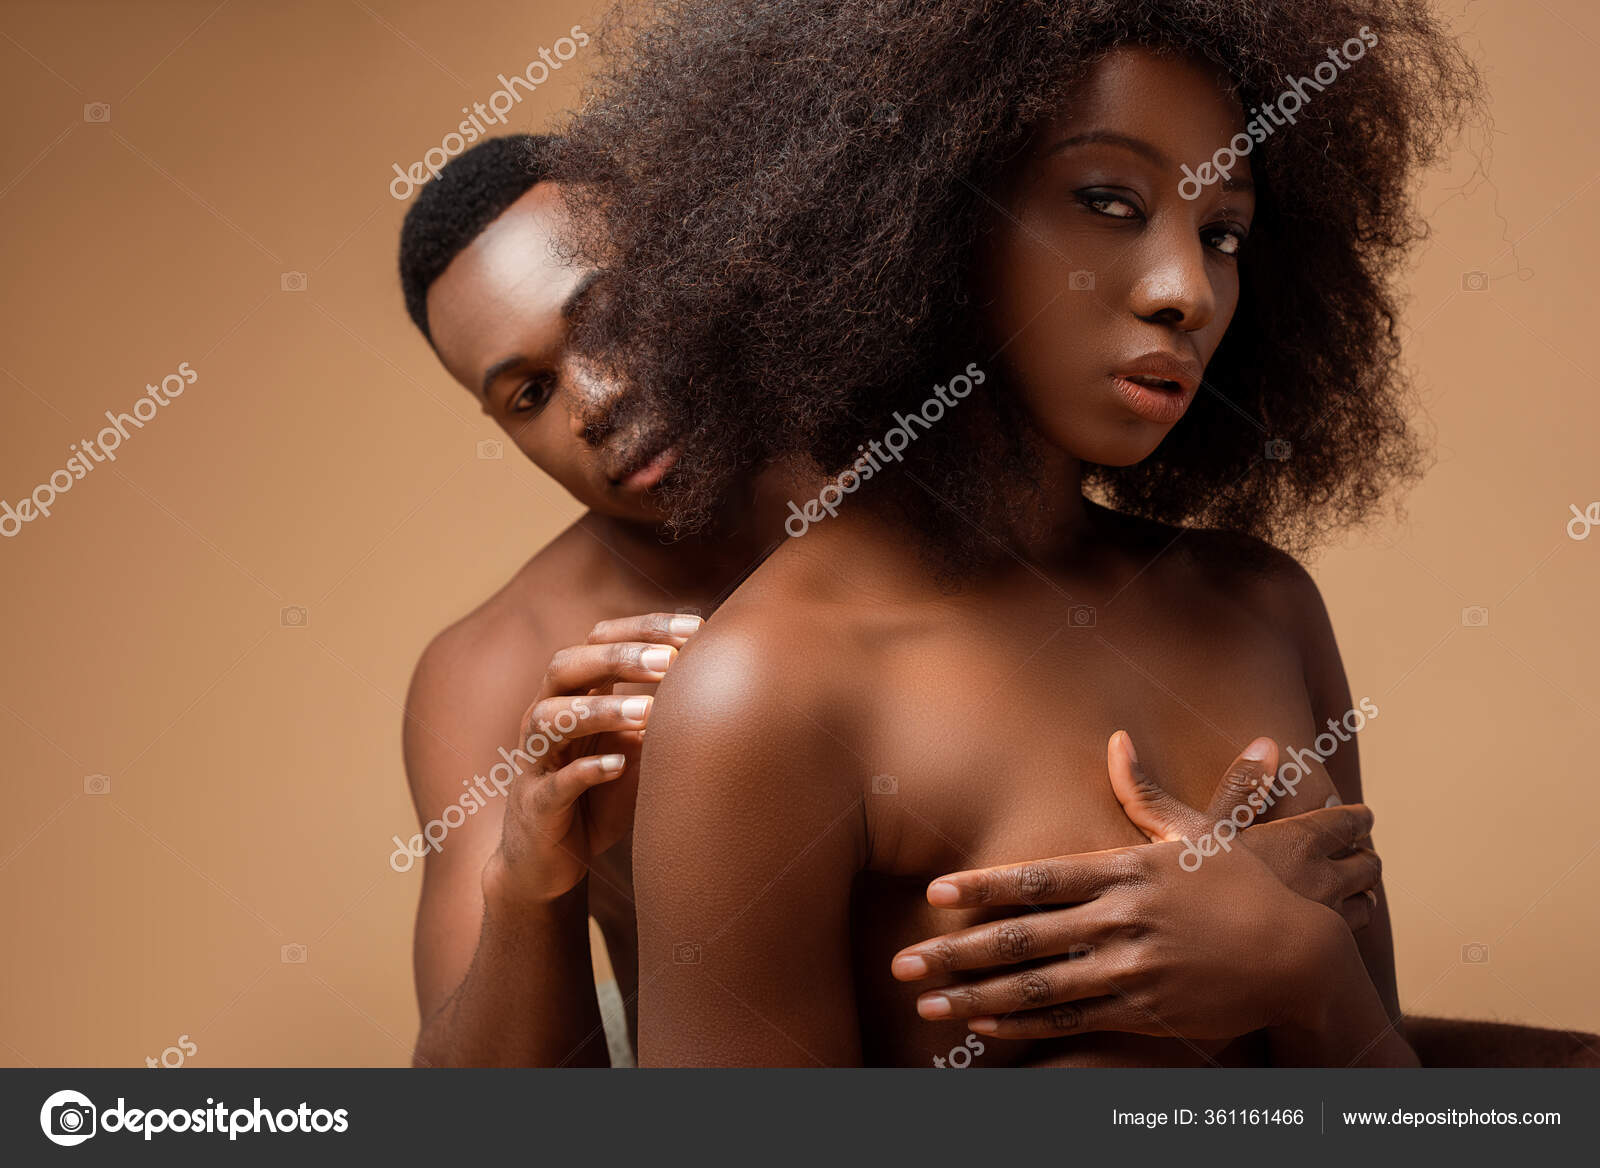 Hot naked black women posing